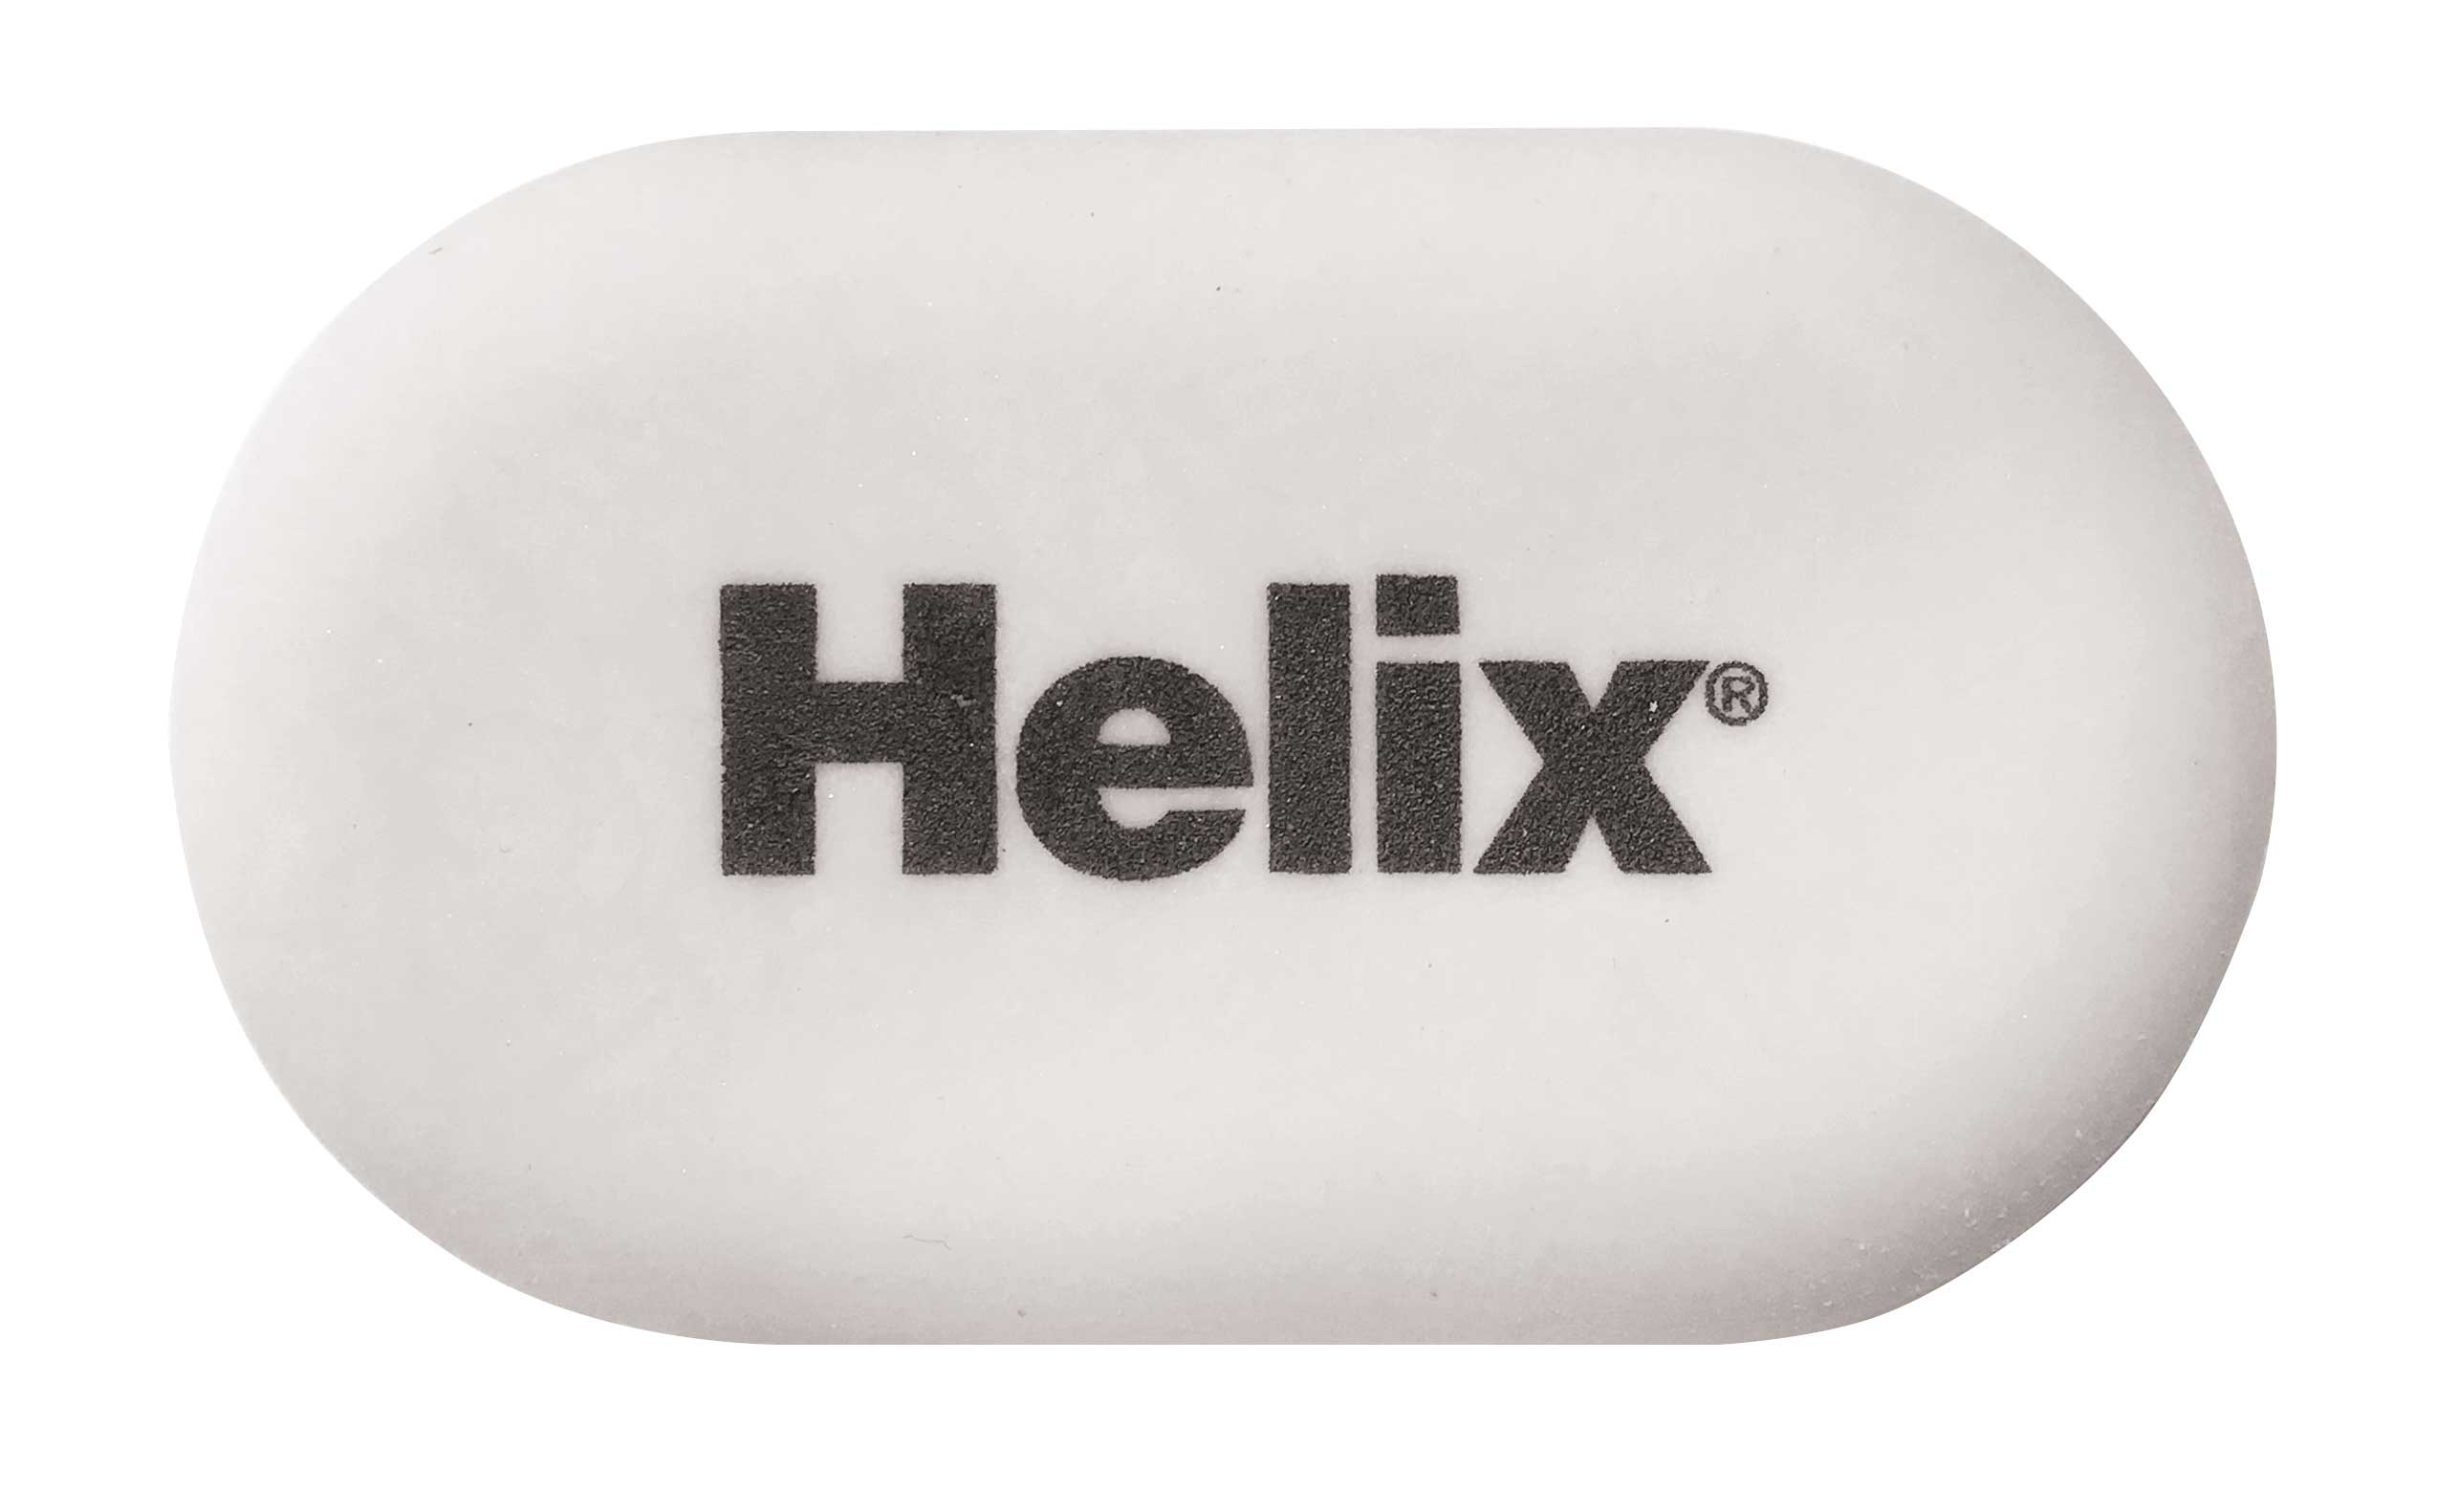 Helix large tablet eraser out of packaging